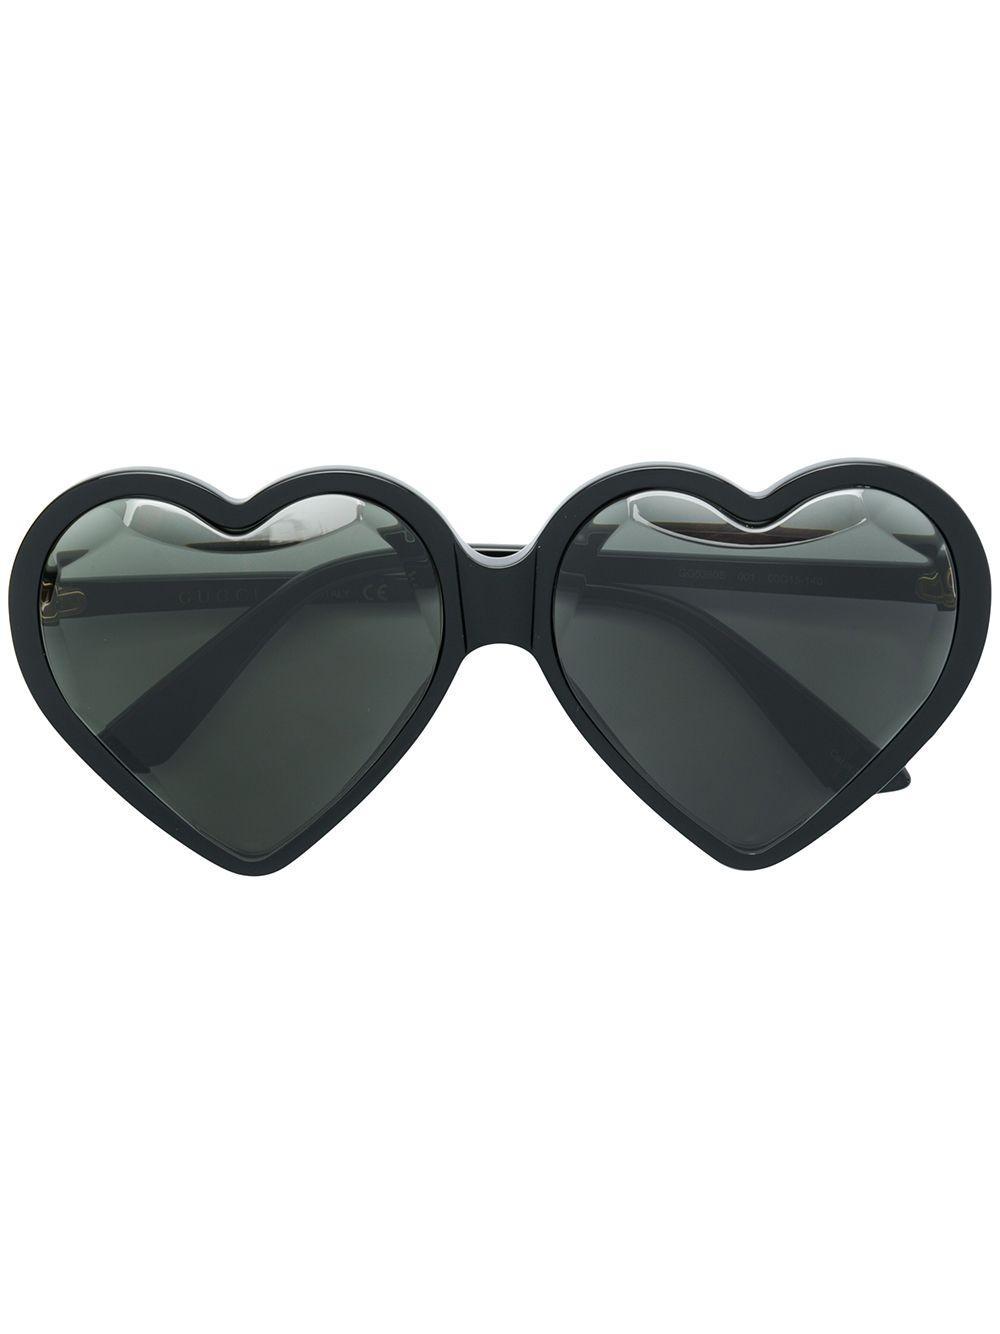 Gucci Heart-shaped Sunglasses in Black | Lyst